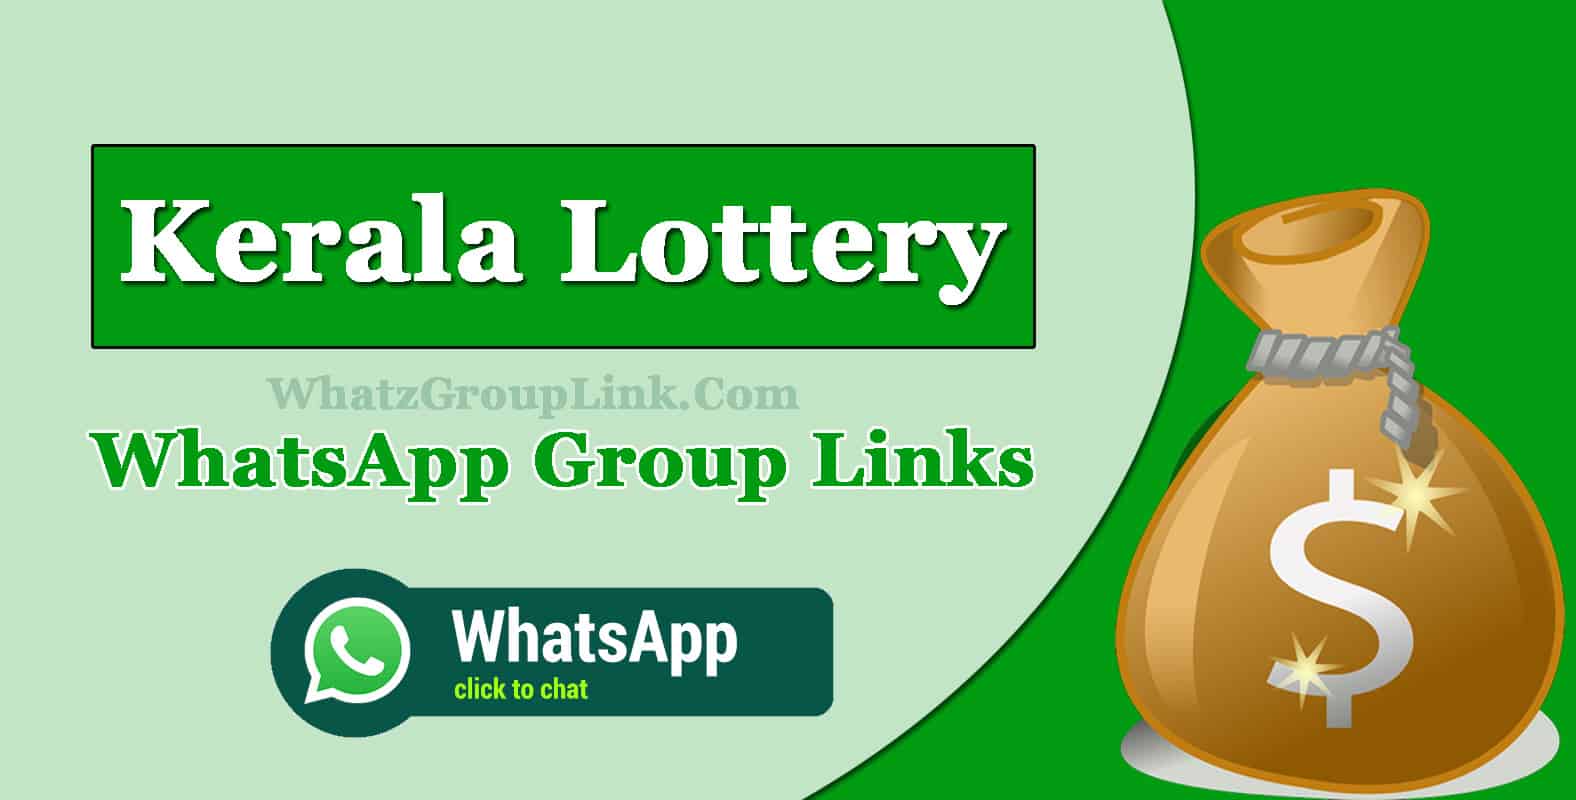 Kerala Lottery WhatsApp Group Link